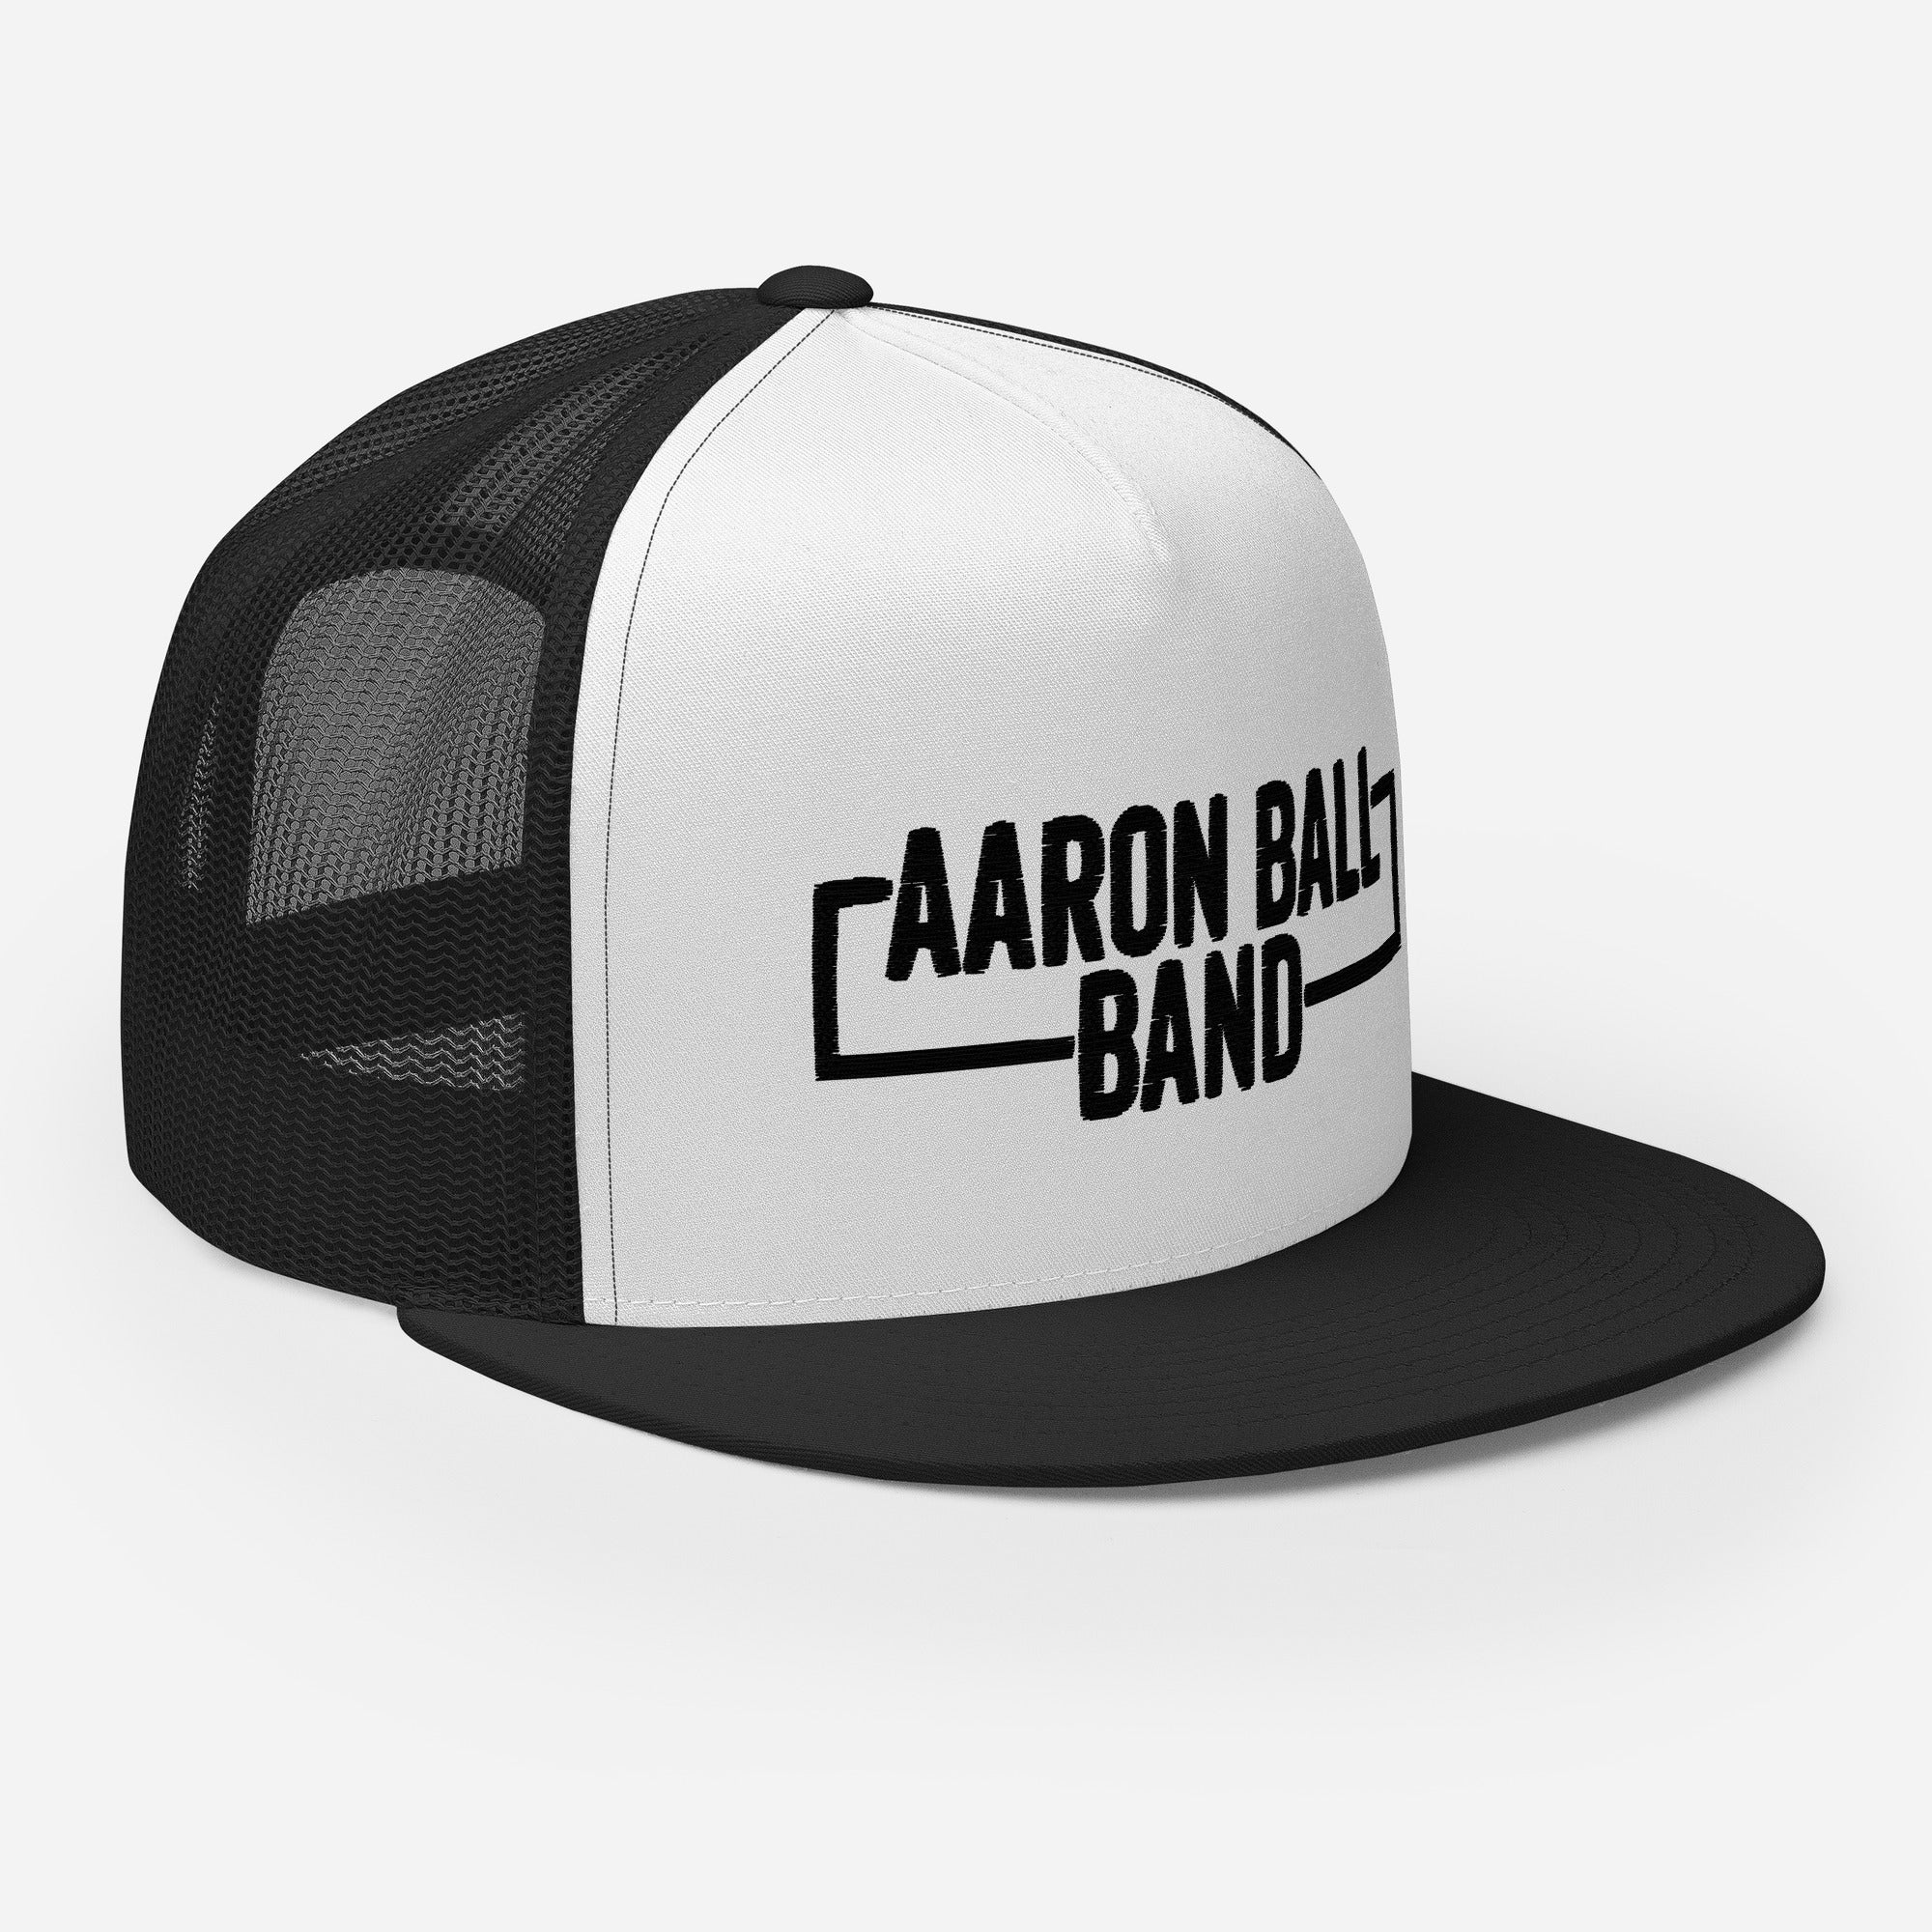 Aaron Ball Band - Trucker Cap